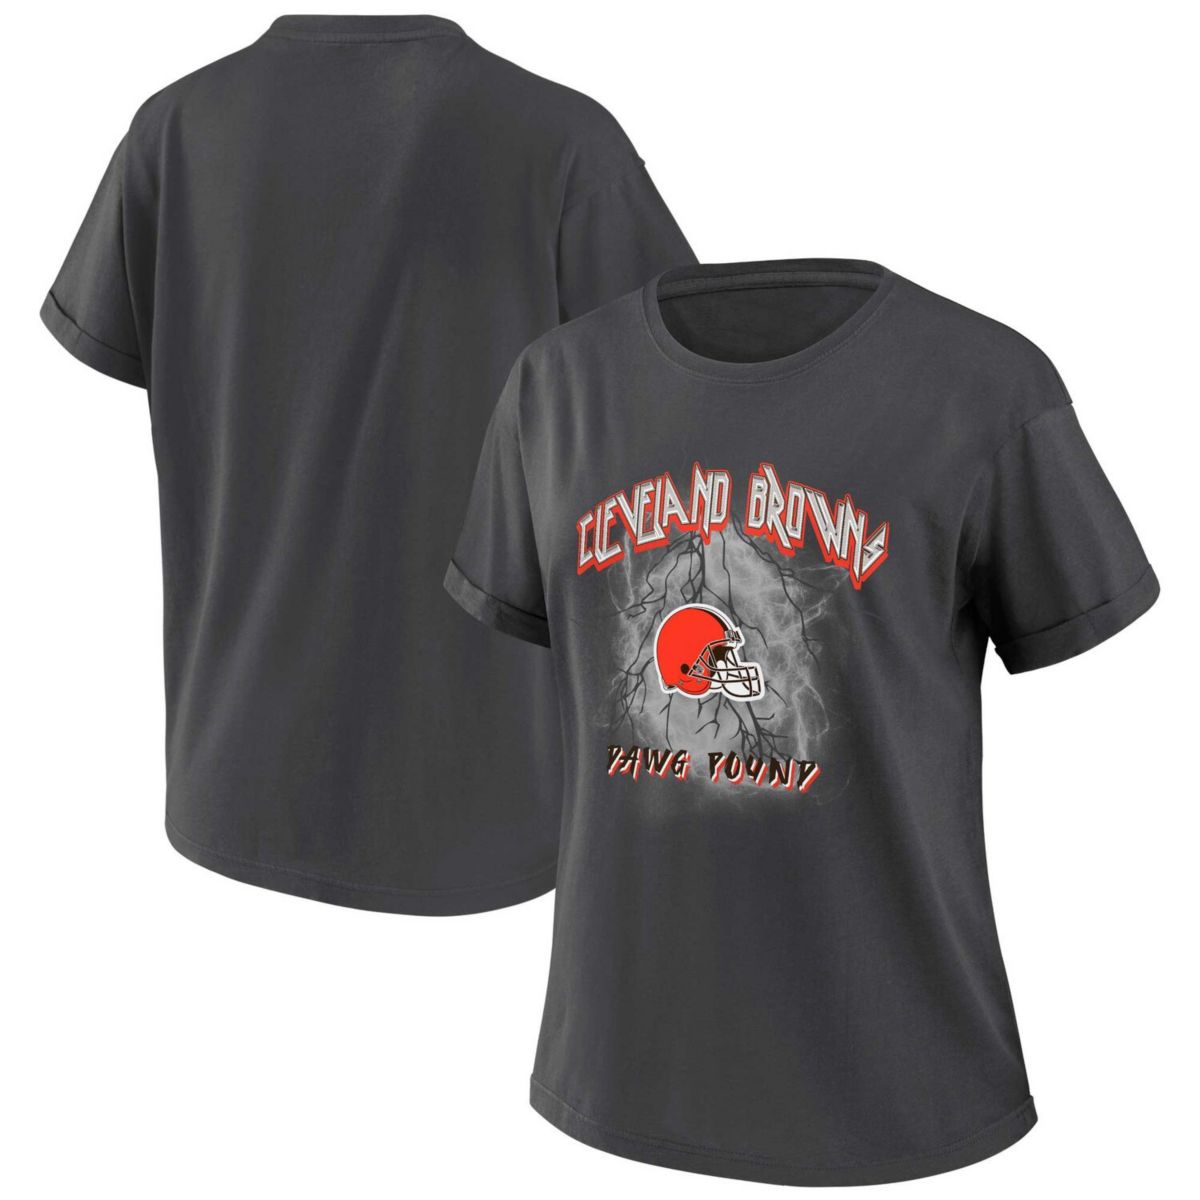 Women's WEAR by Erin Andrews Charcoal Cleveland Browns Boyfriend T-Shirt WEAR by Erin Andrews